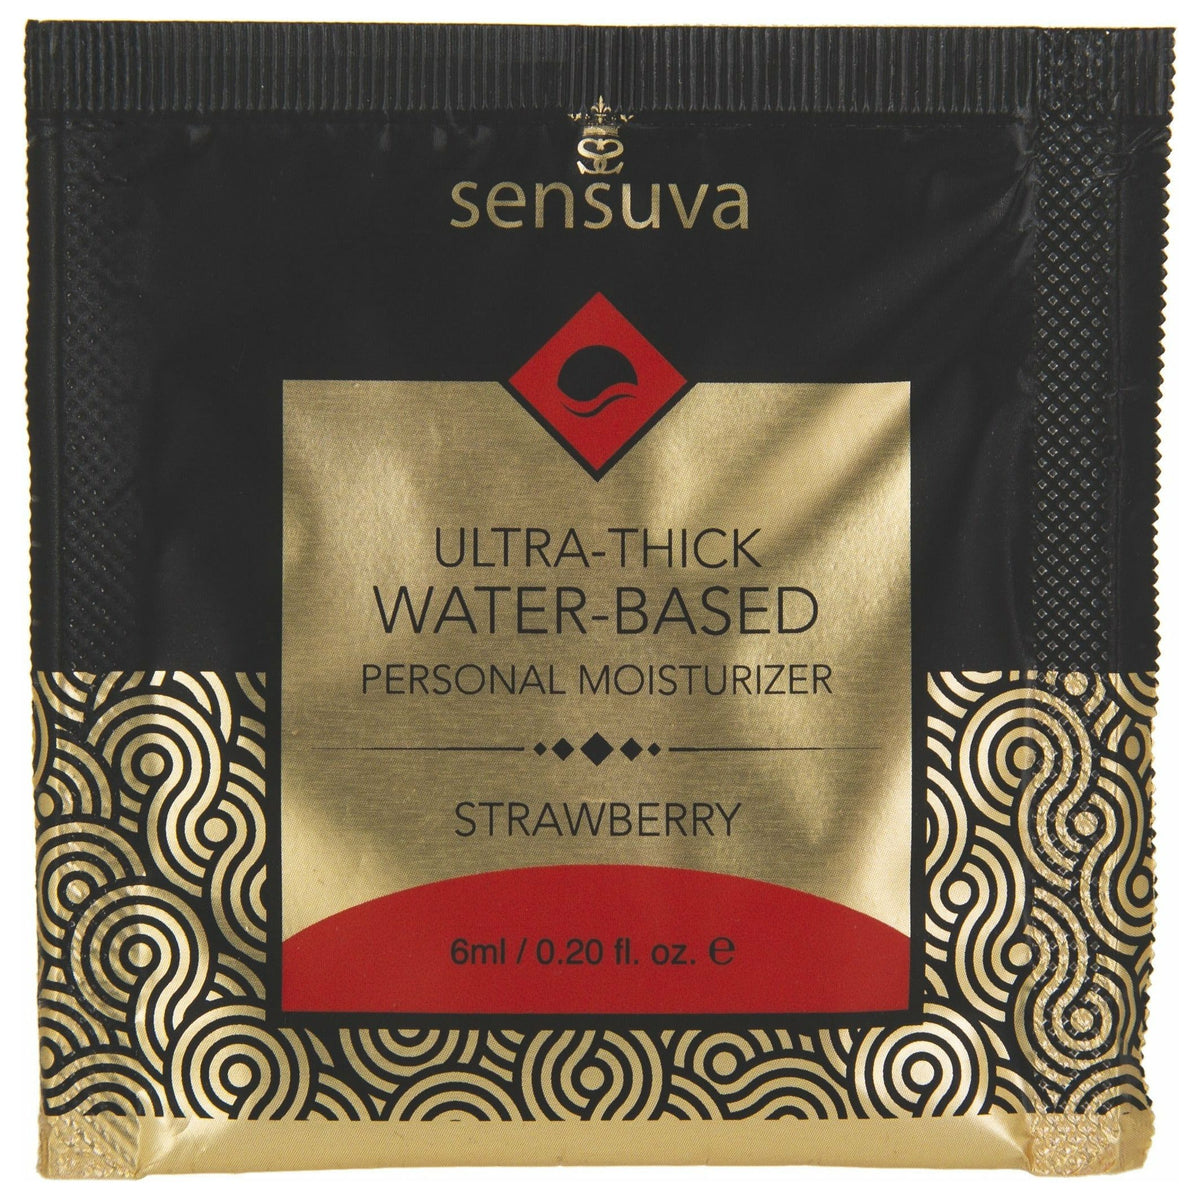 Sensuva Ultra-Thick Water-Based Formula – Personal Moisturizer – Strawberry - 6ml/0.20 oz